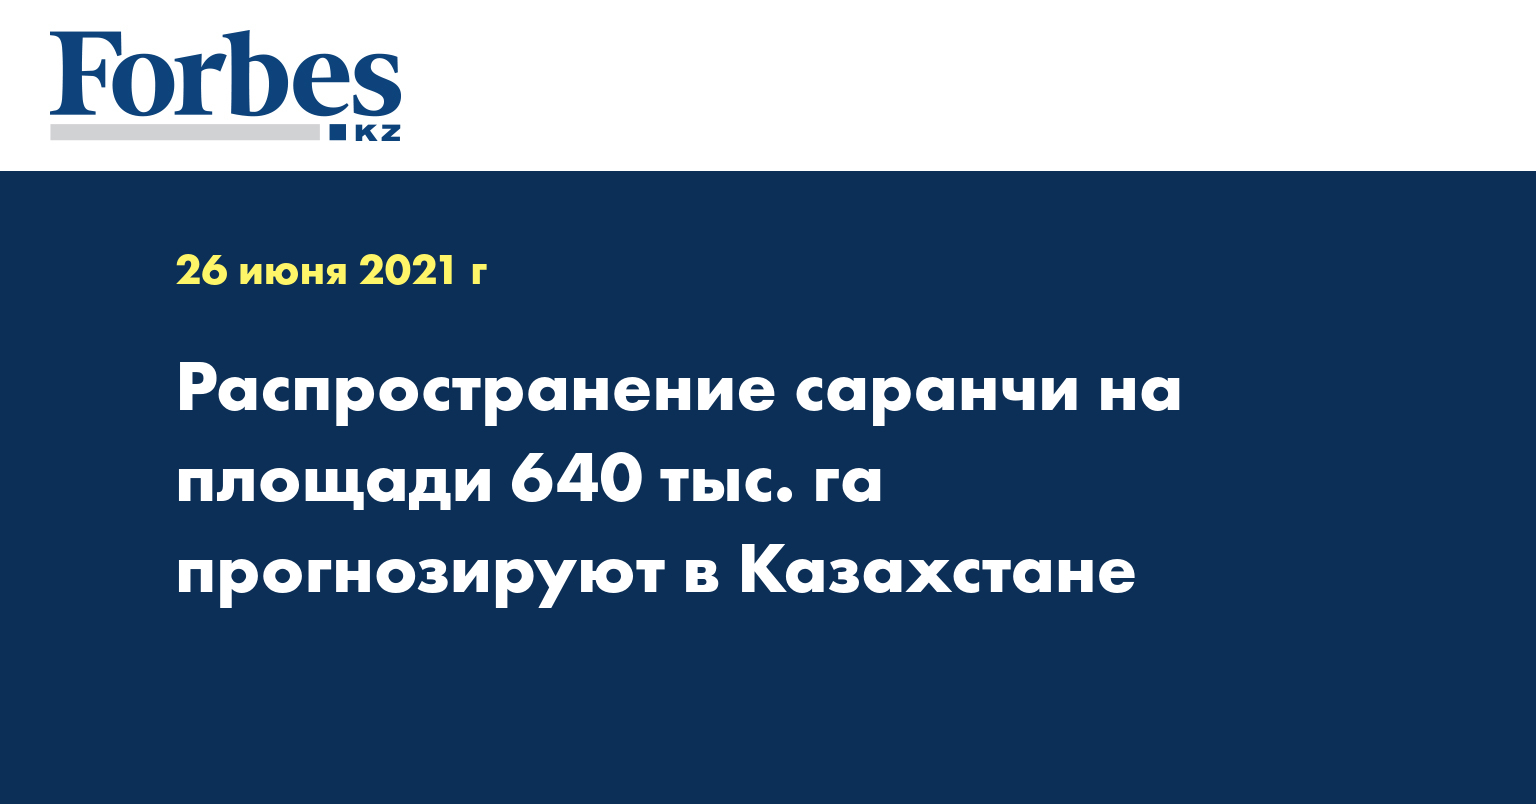 Распространение саранчи на площади 640 тыс. га. прогнозируют в Казахстане